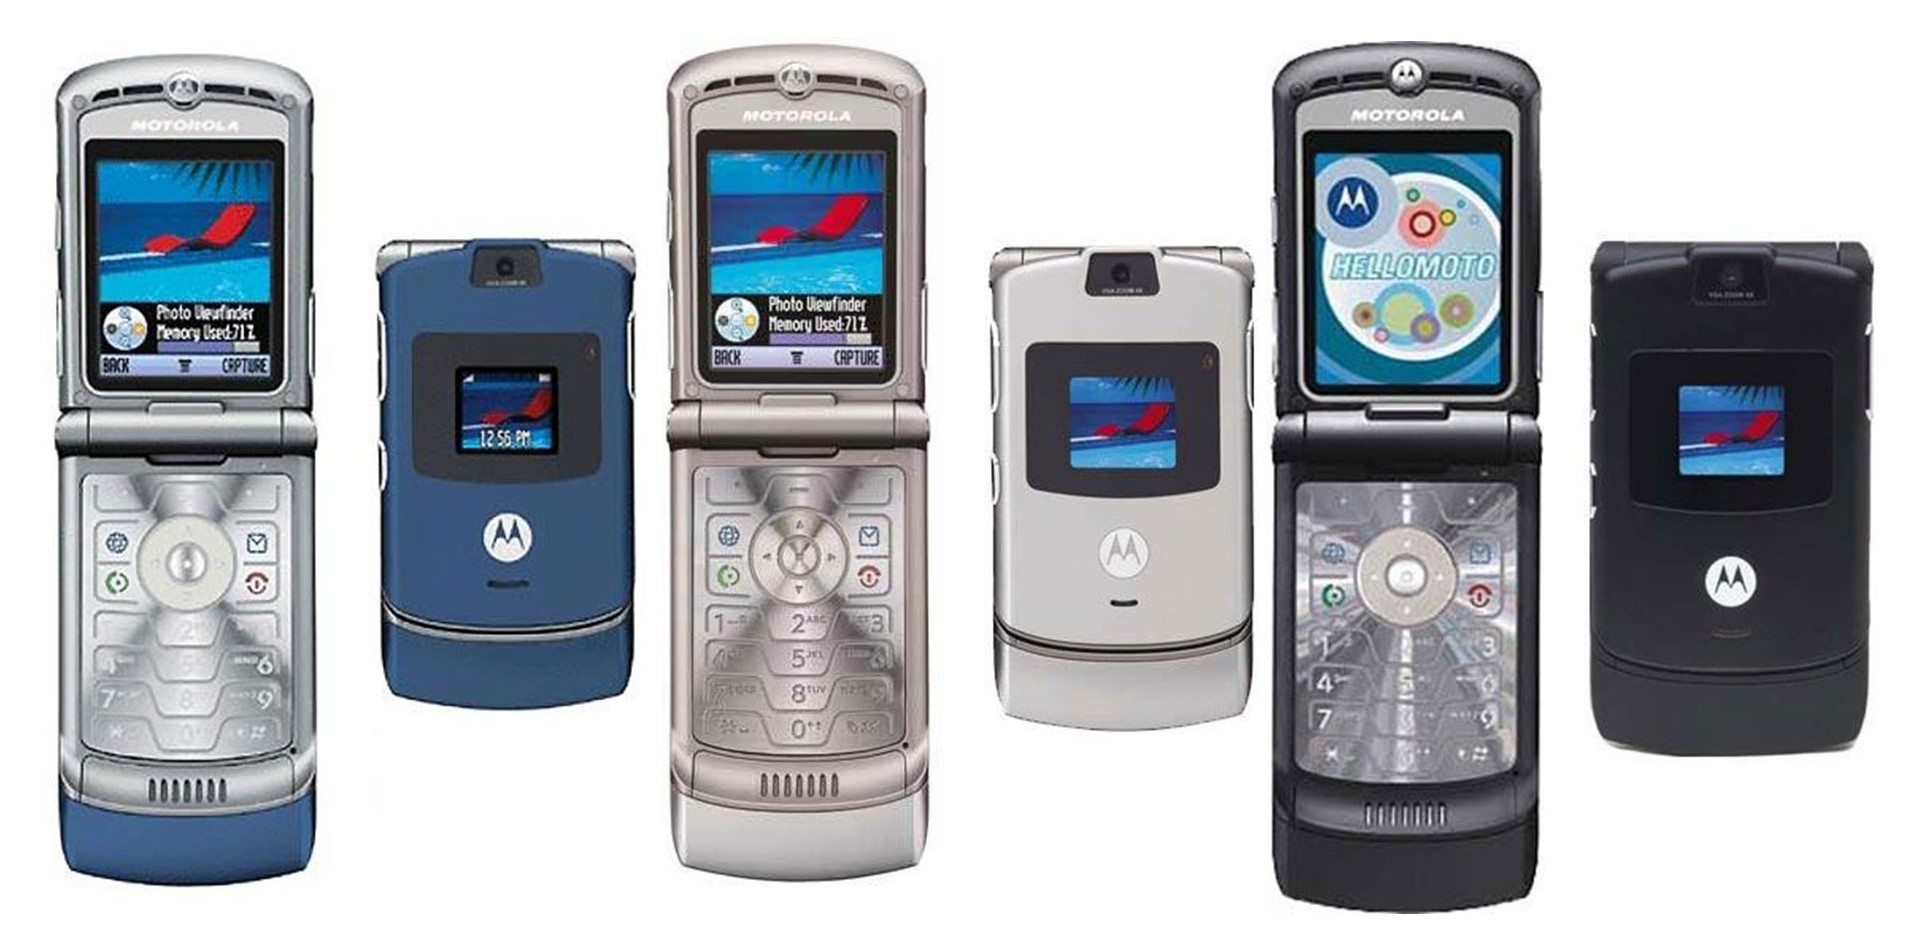 In 2004, Motorola launched the RAZR V3